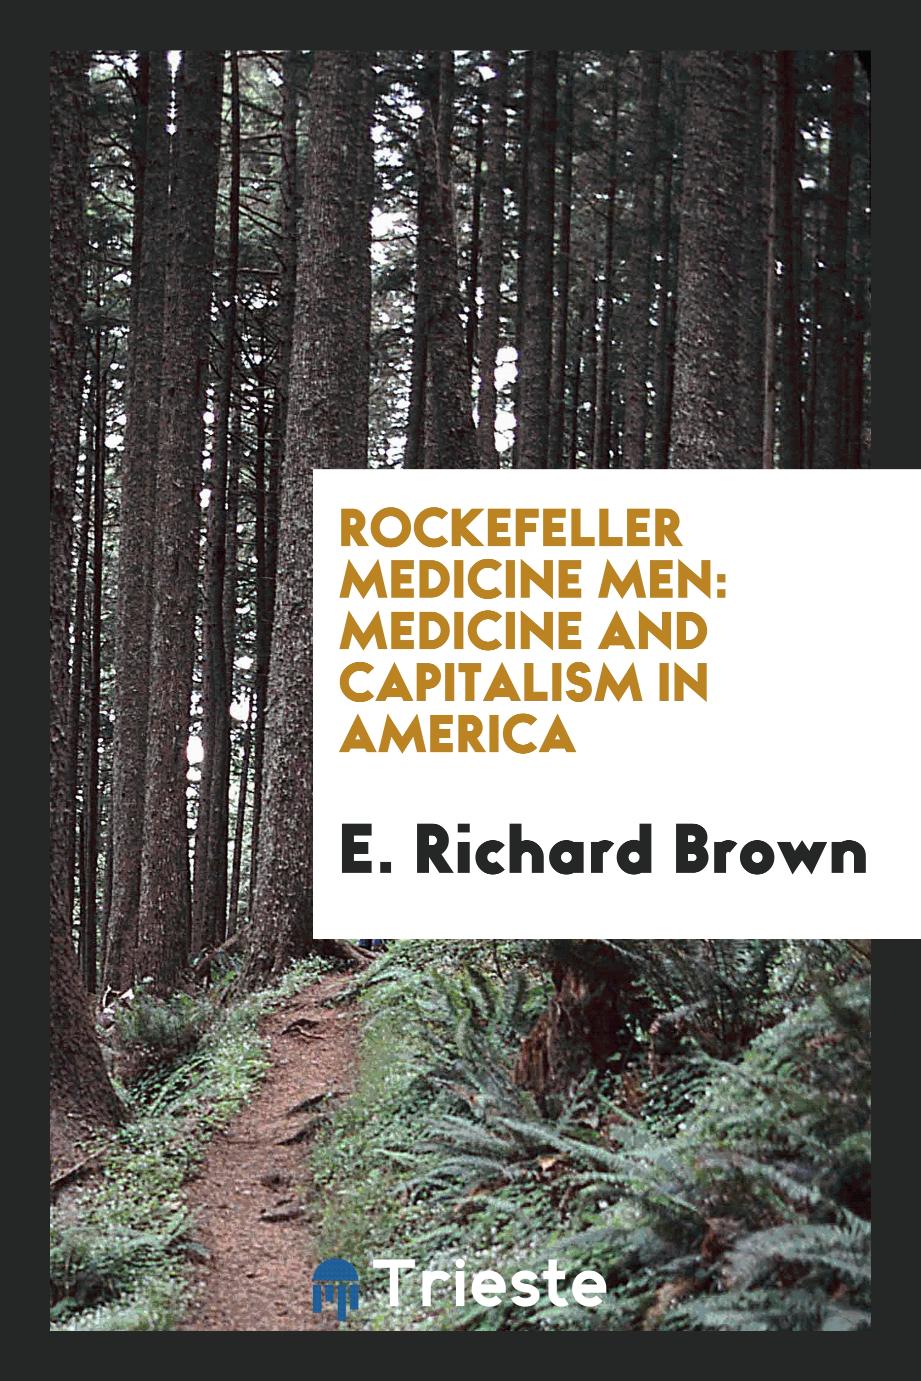 E. Richard Brown - Rockefeller Medicine Men: Medicine and Capitalism in America